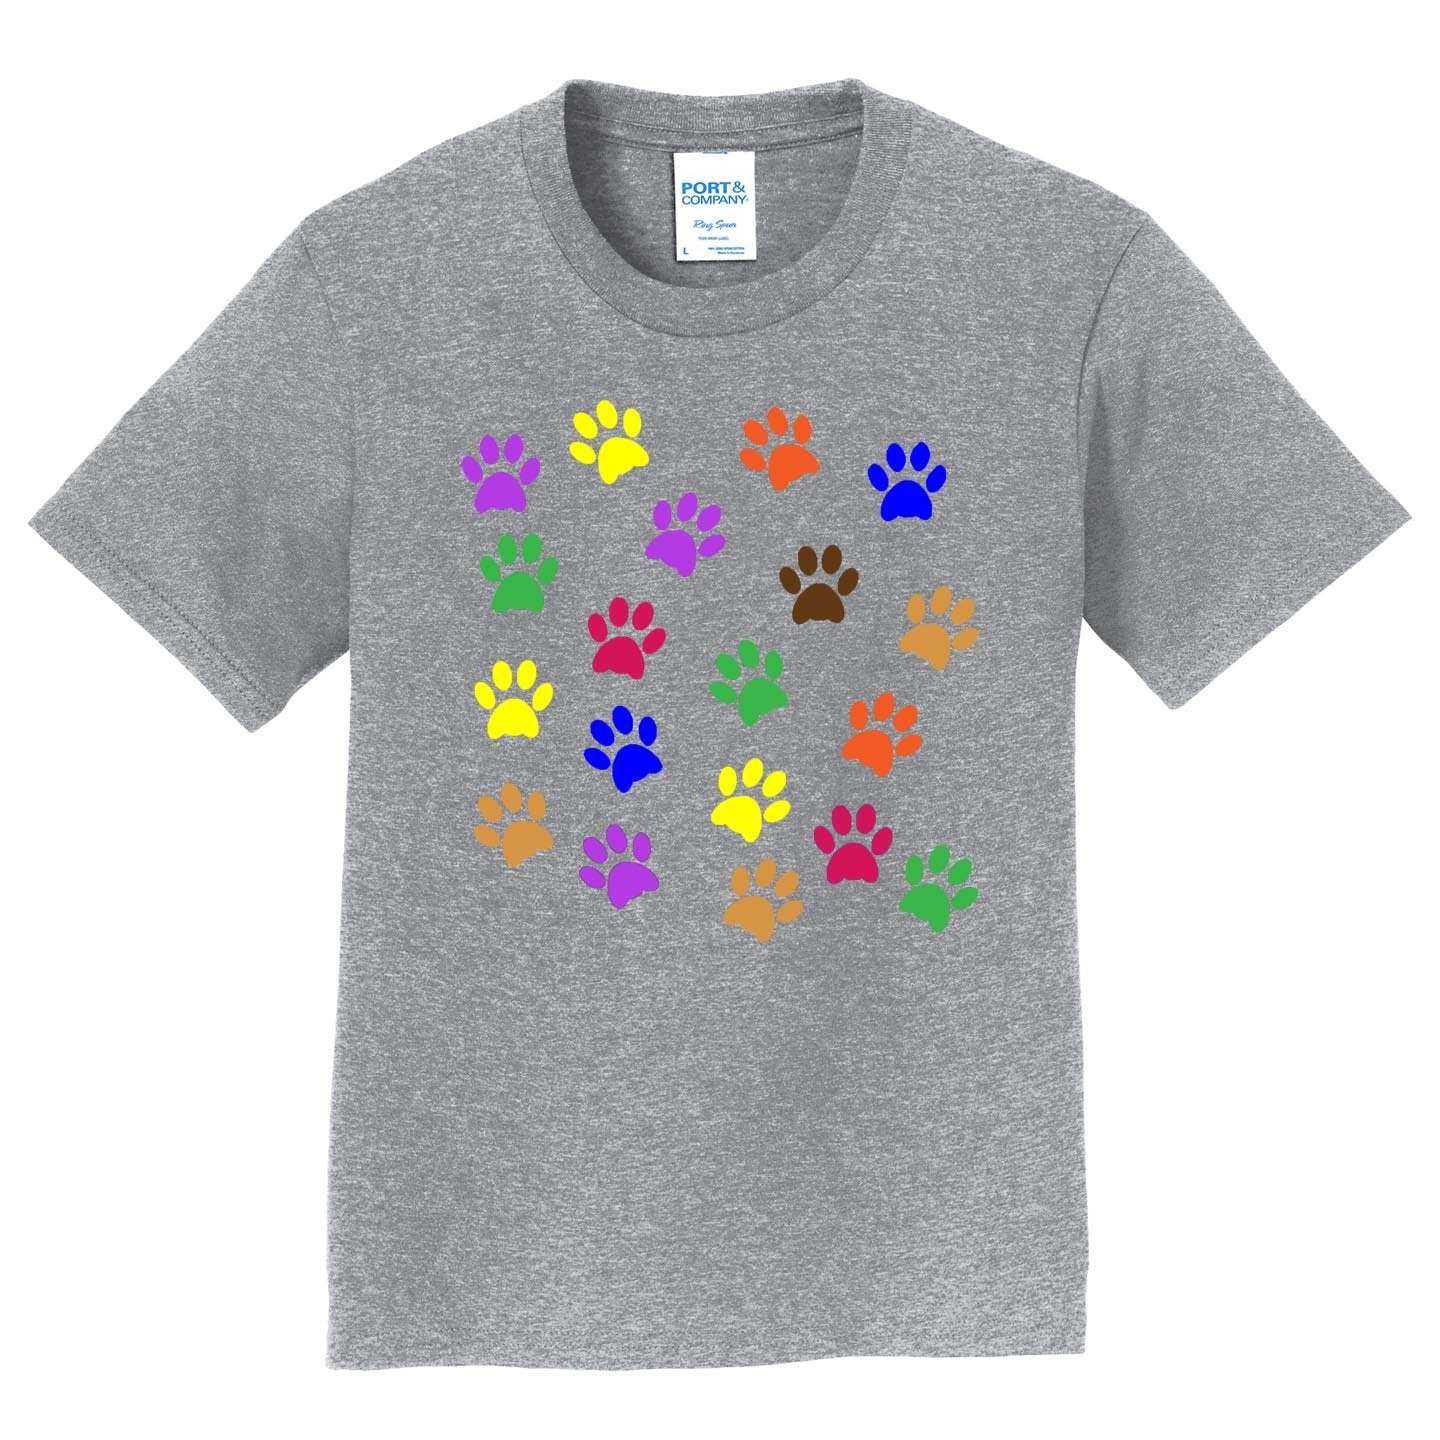 Colorful Paw Prints - Kids' Unisex T-Shirt